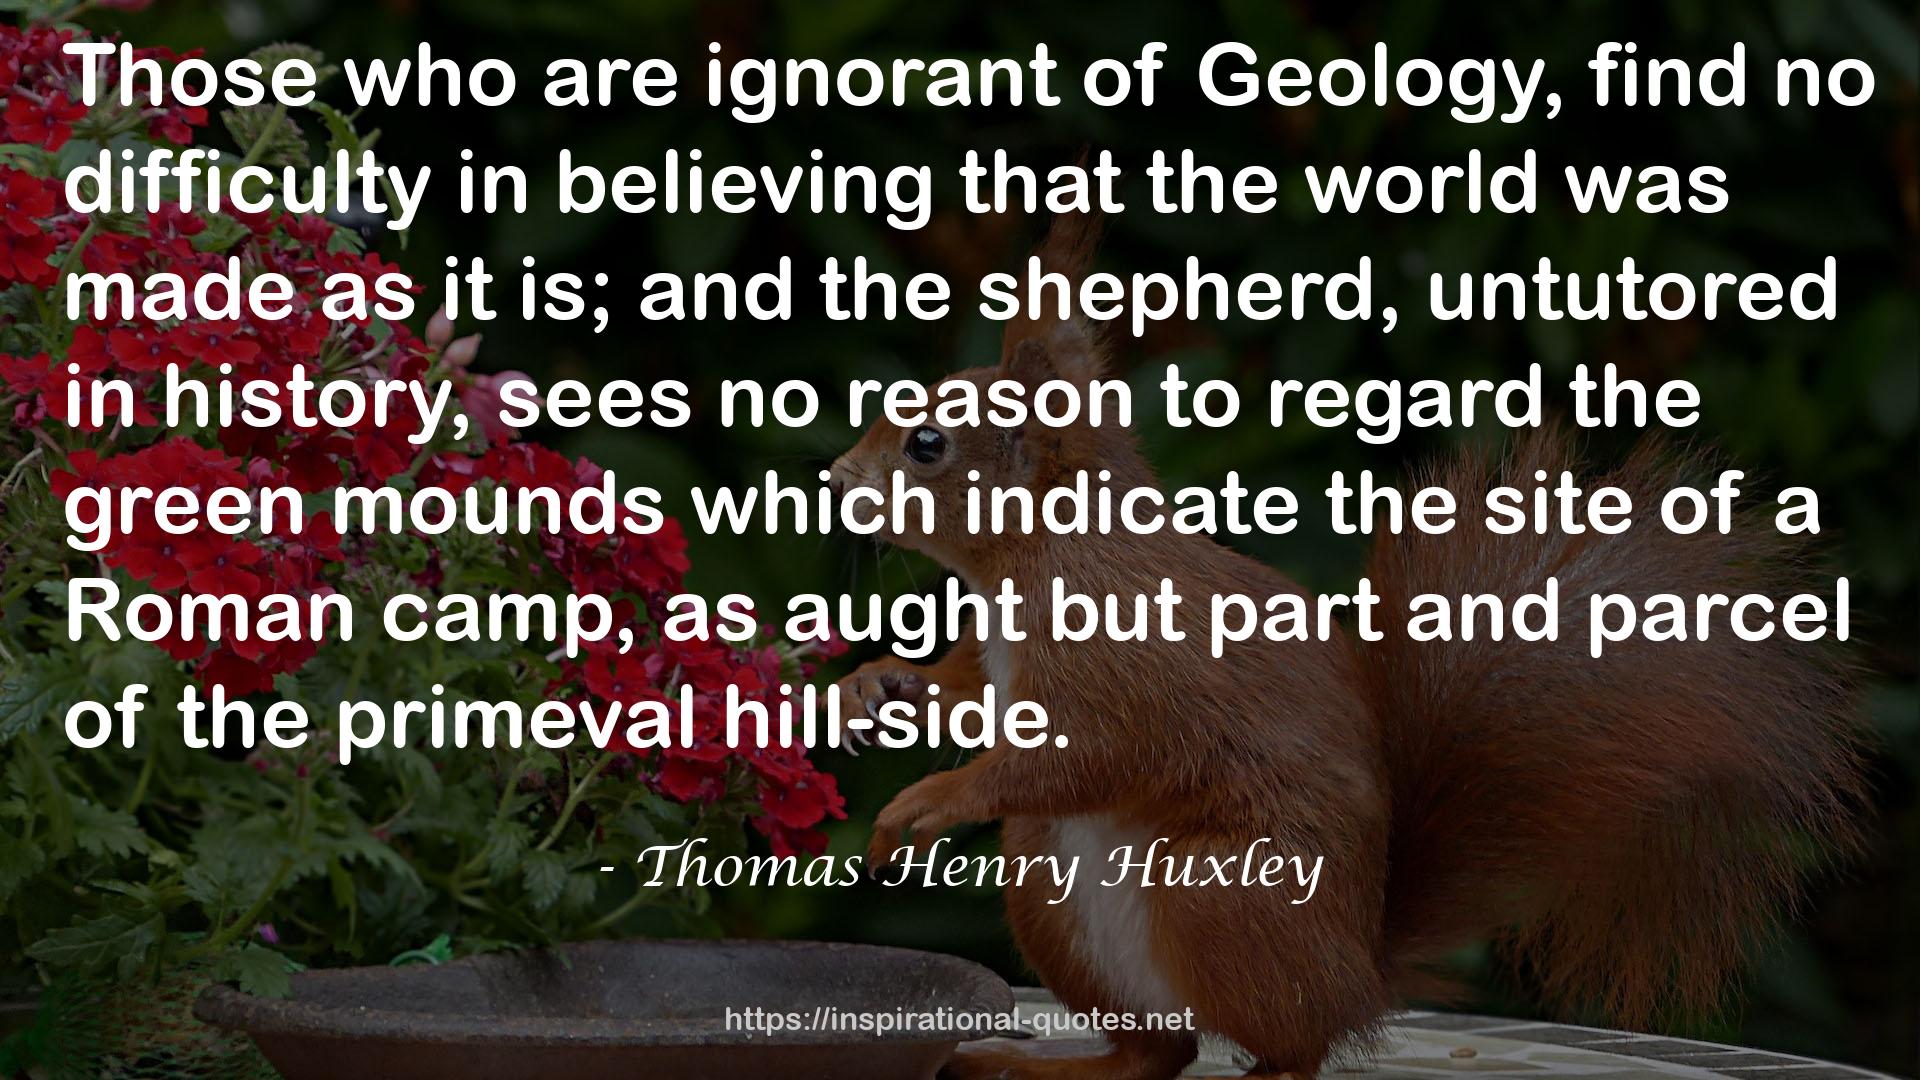 Thomas Henry Huxley QUOTES